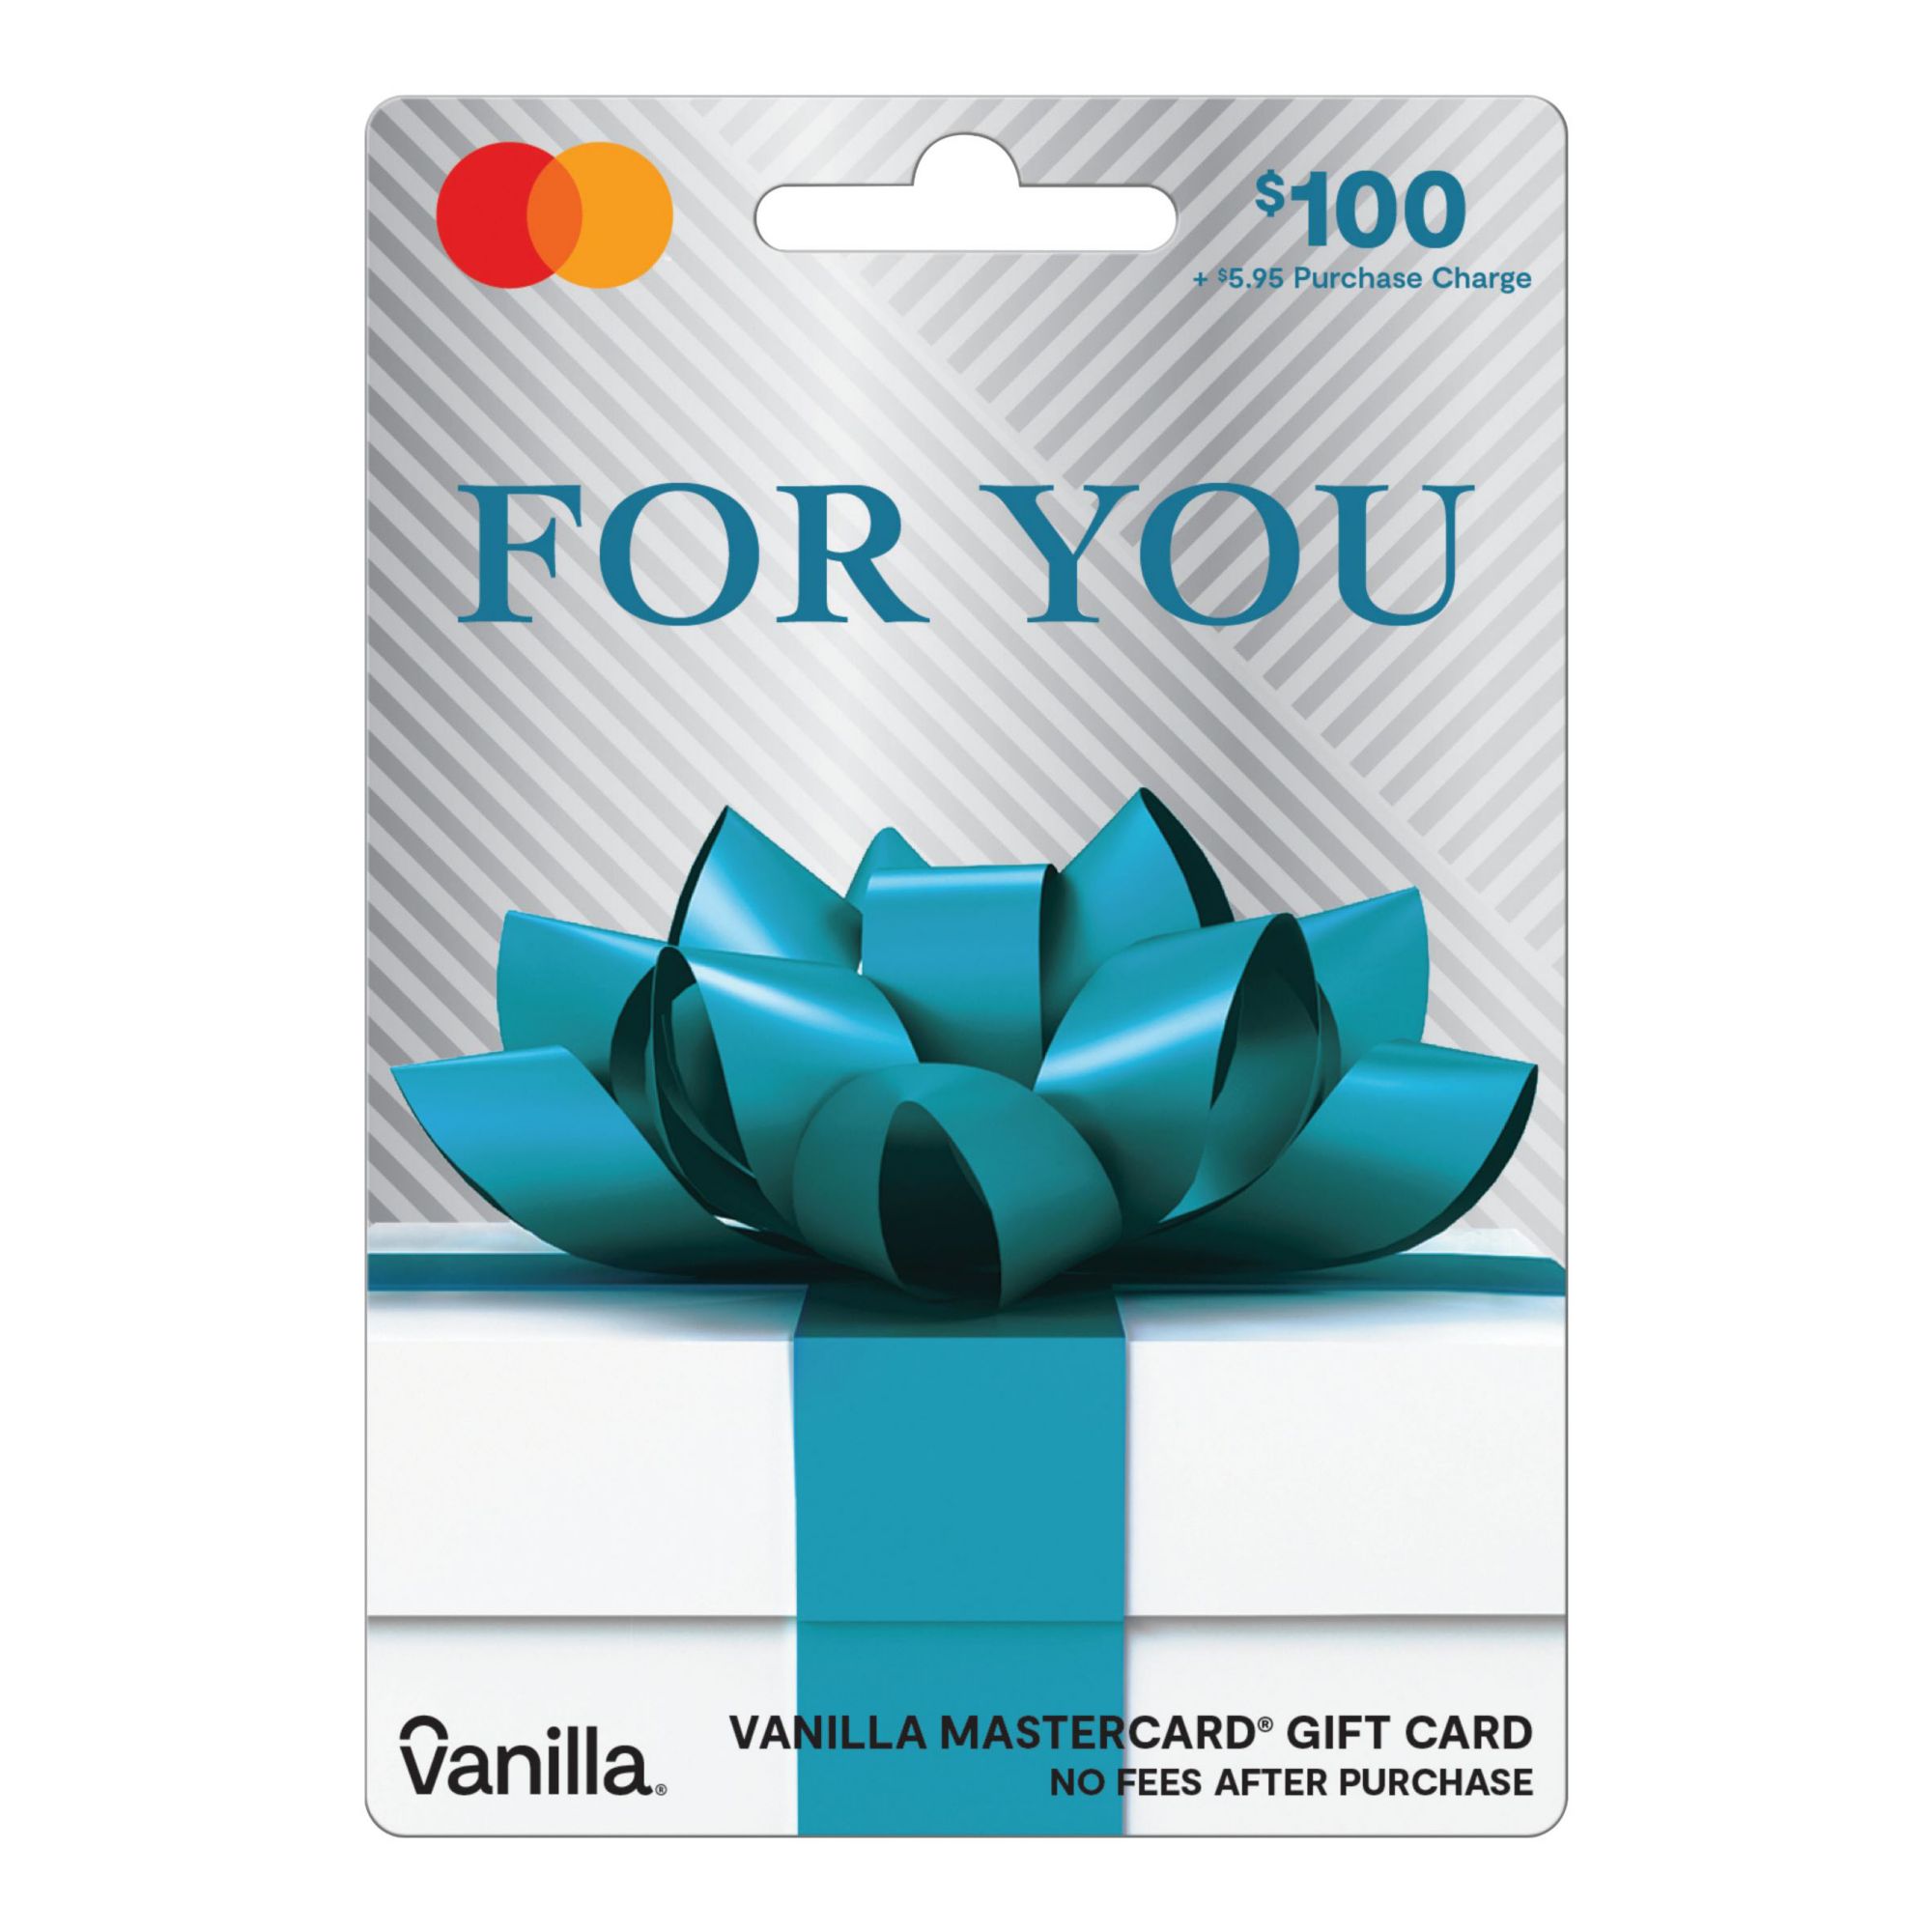 PlayStation Store Gifting $100 Gift Card (Digital)